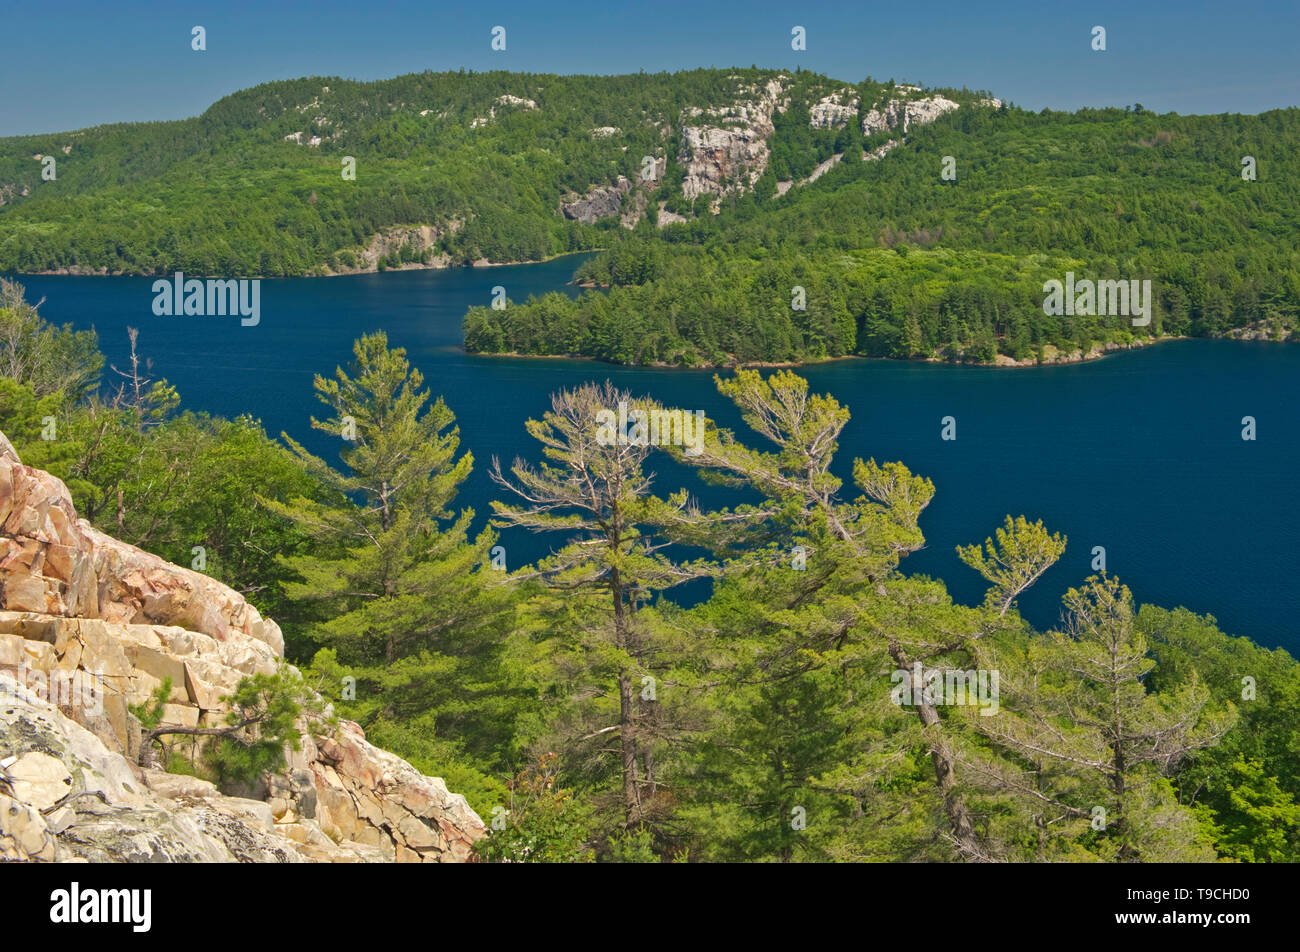 Vue sur le lac de Killarney, le pin blanc (Pinus strobus) et les collines de la cloche, le sommet d'un Precambiran shield Le Parc provincial Killarney Ontario Canada Banque D'Images